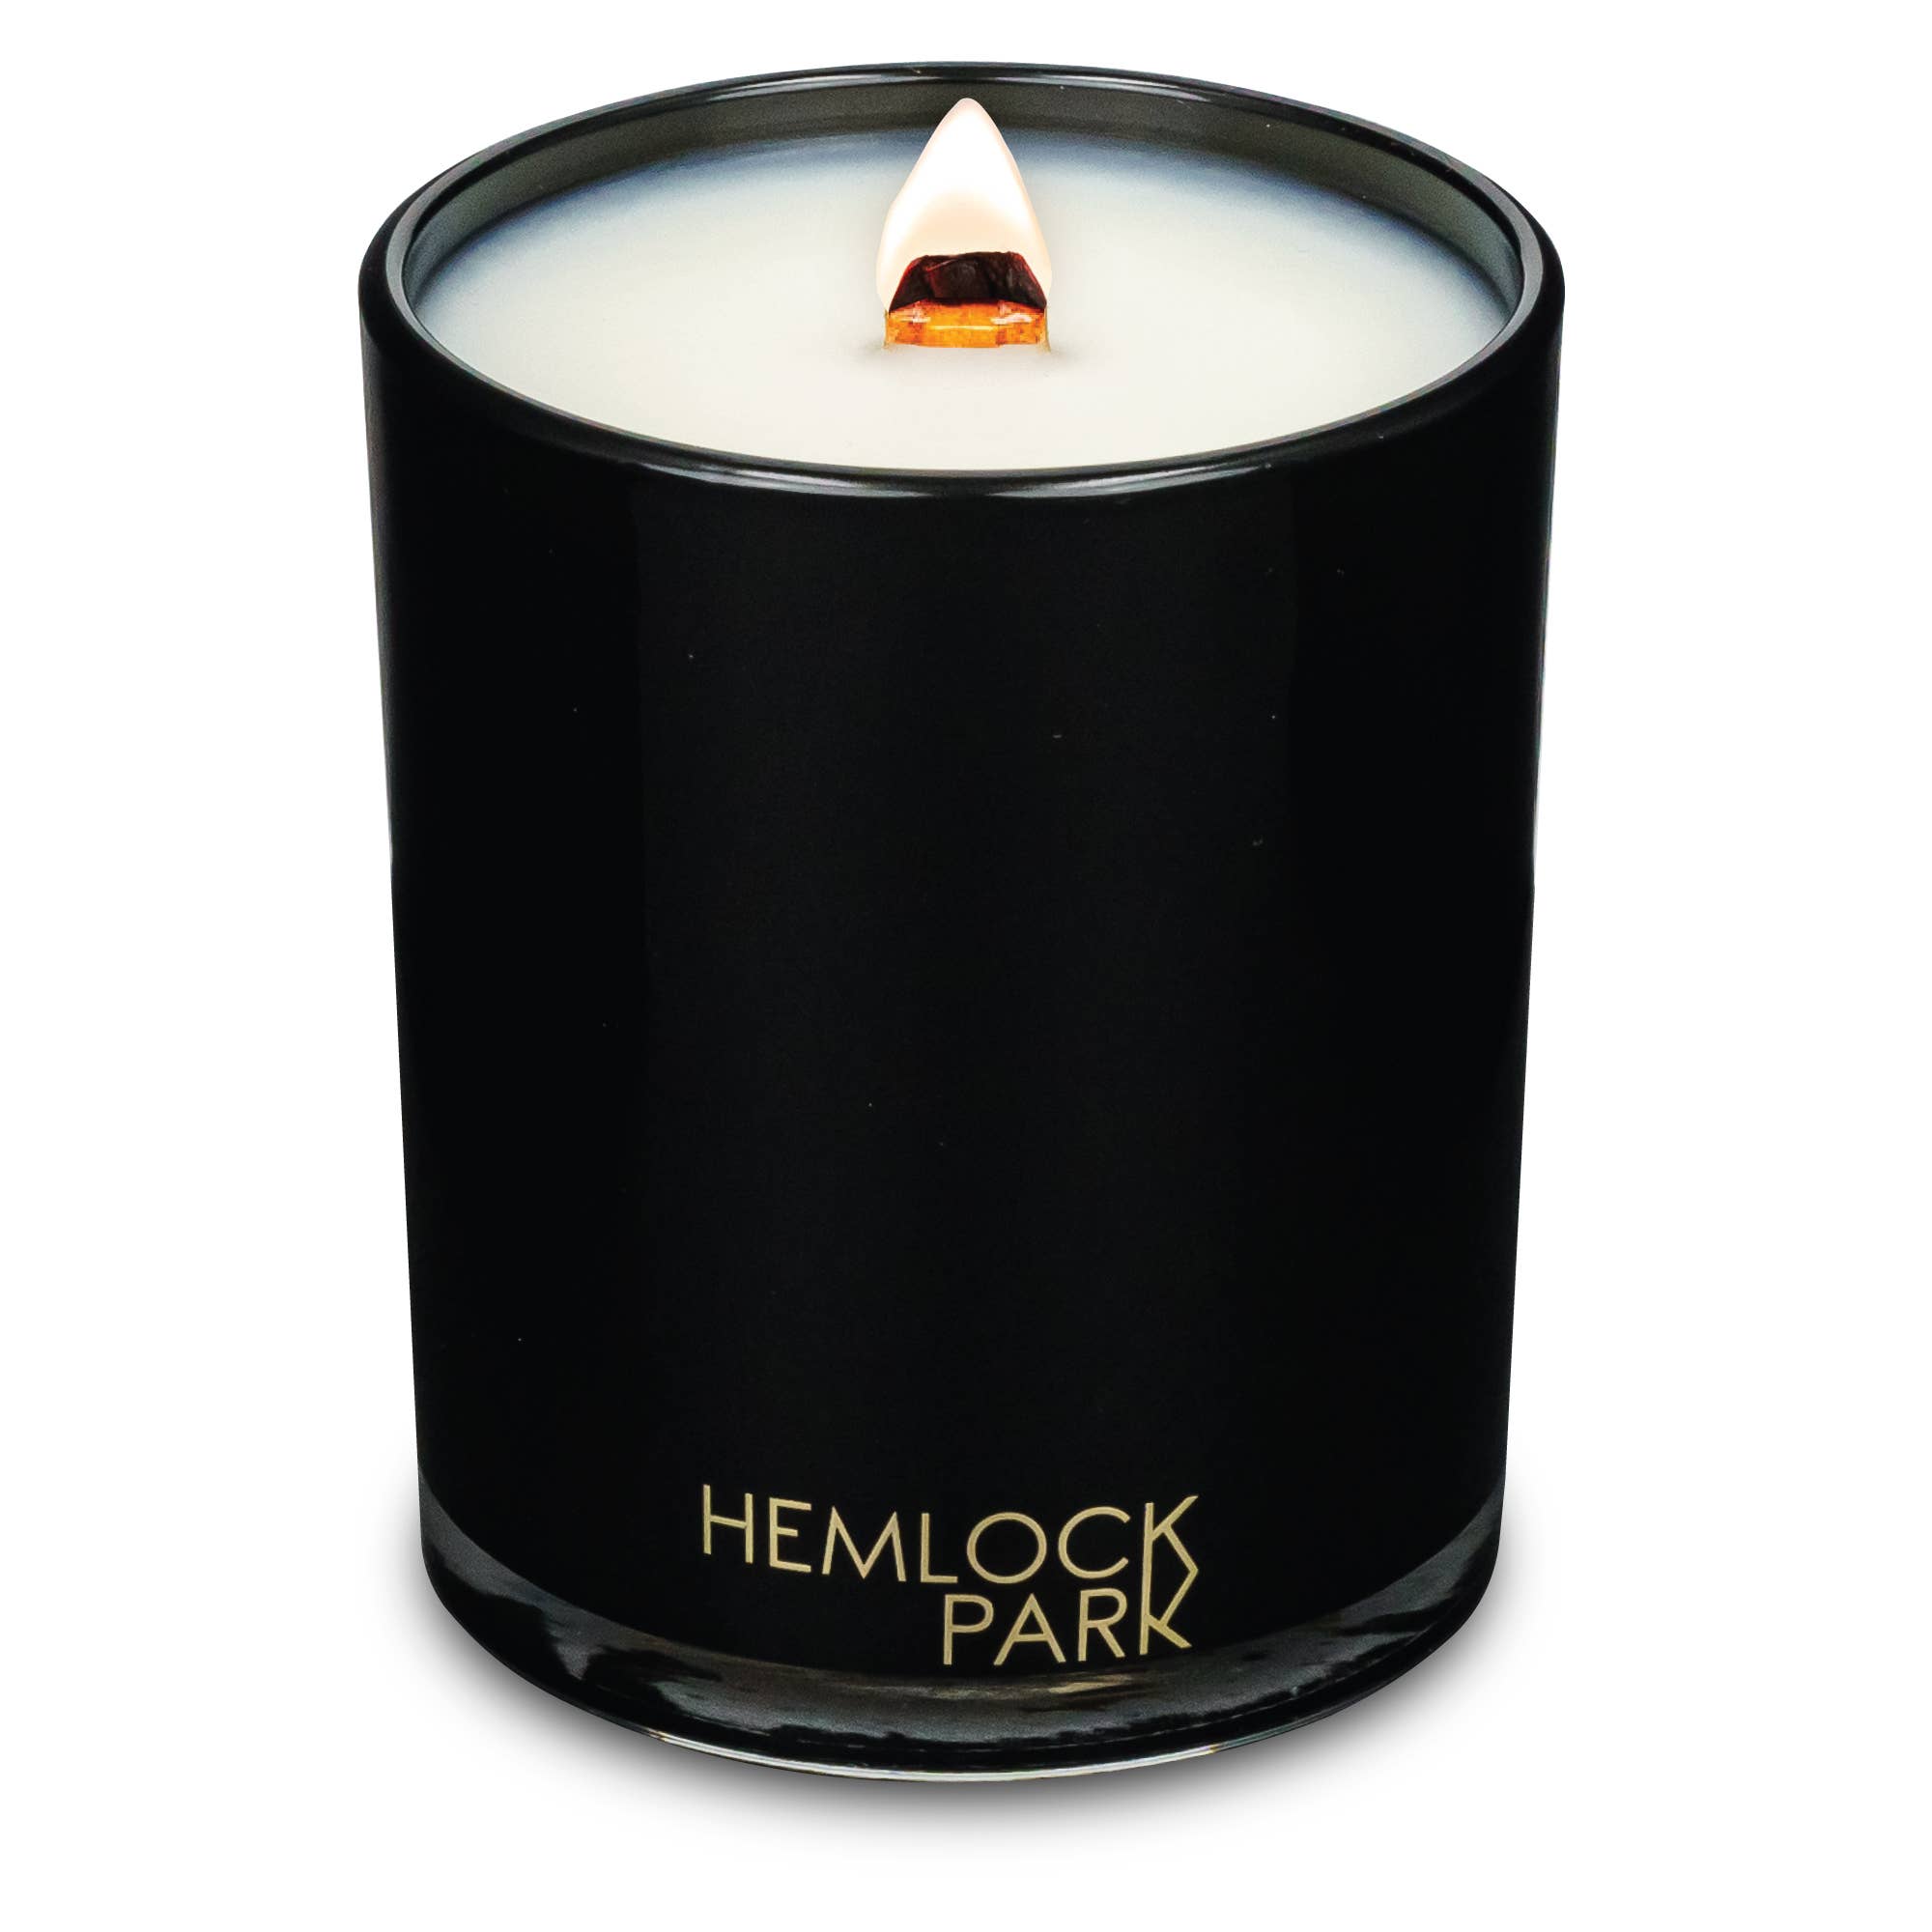 Frankincense  Black & Gold Wood Wick Candle – Hemlock Park